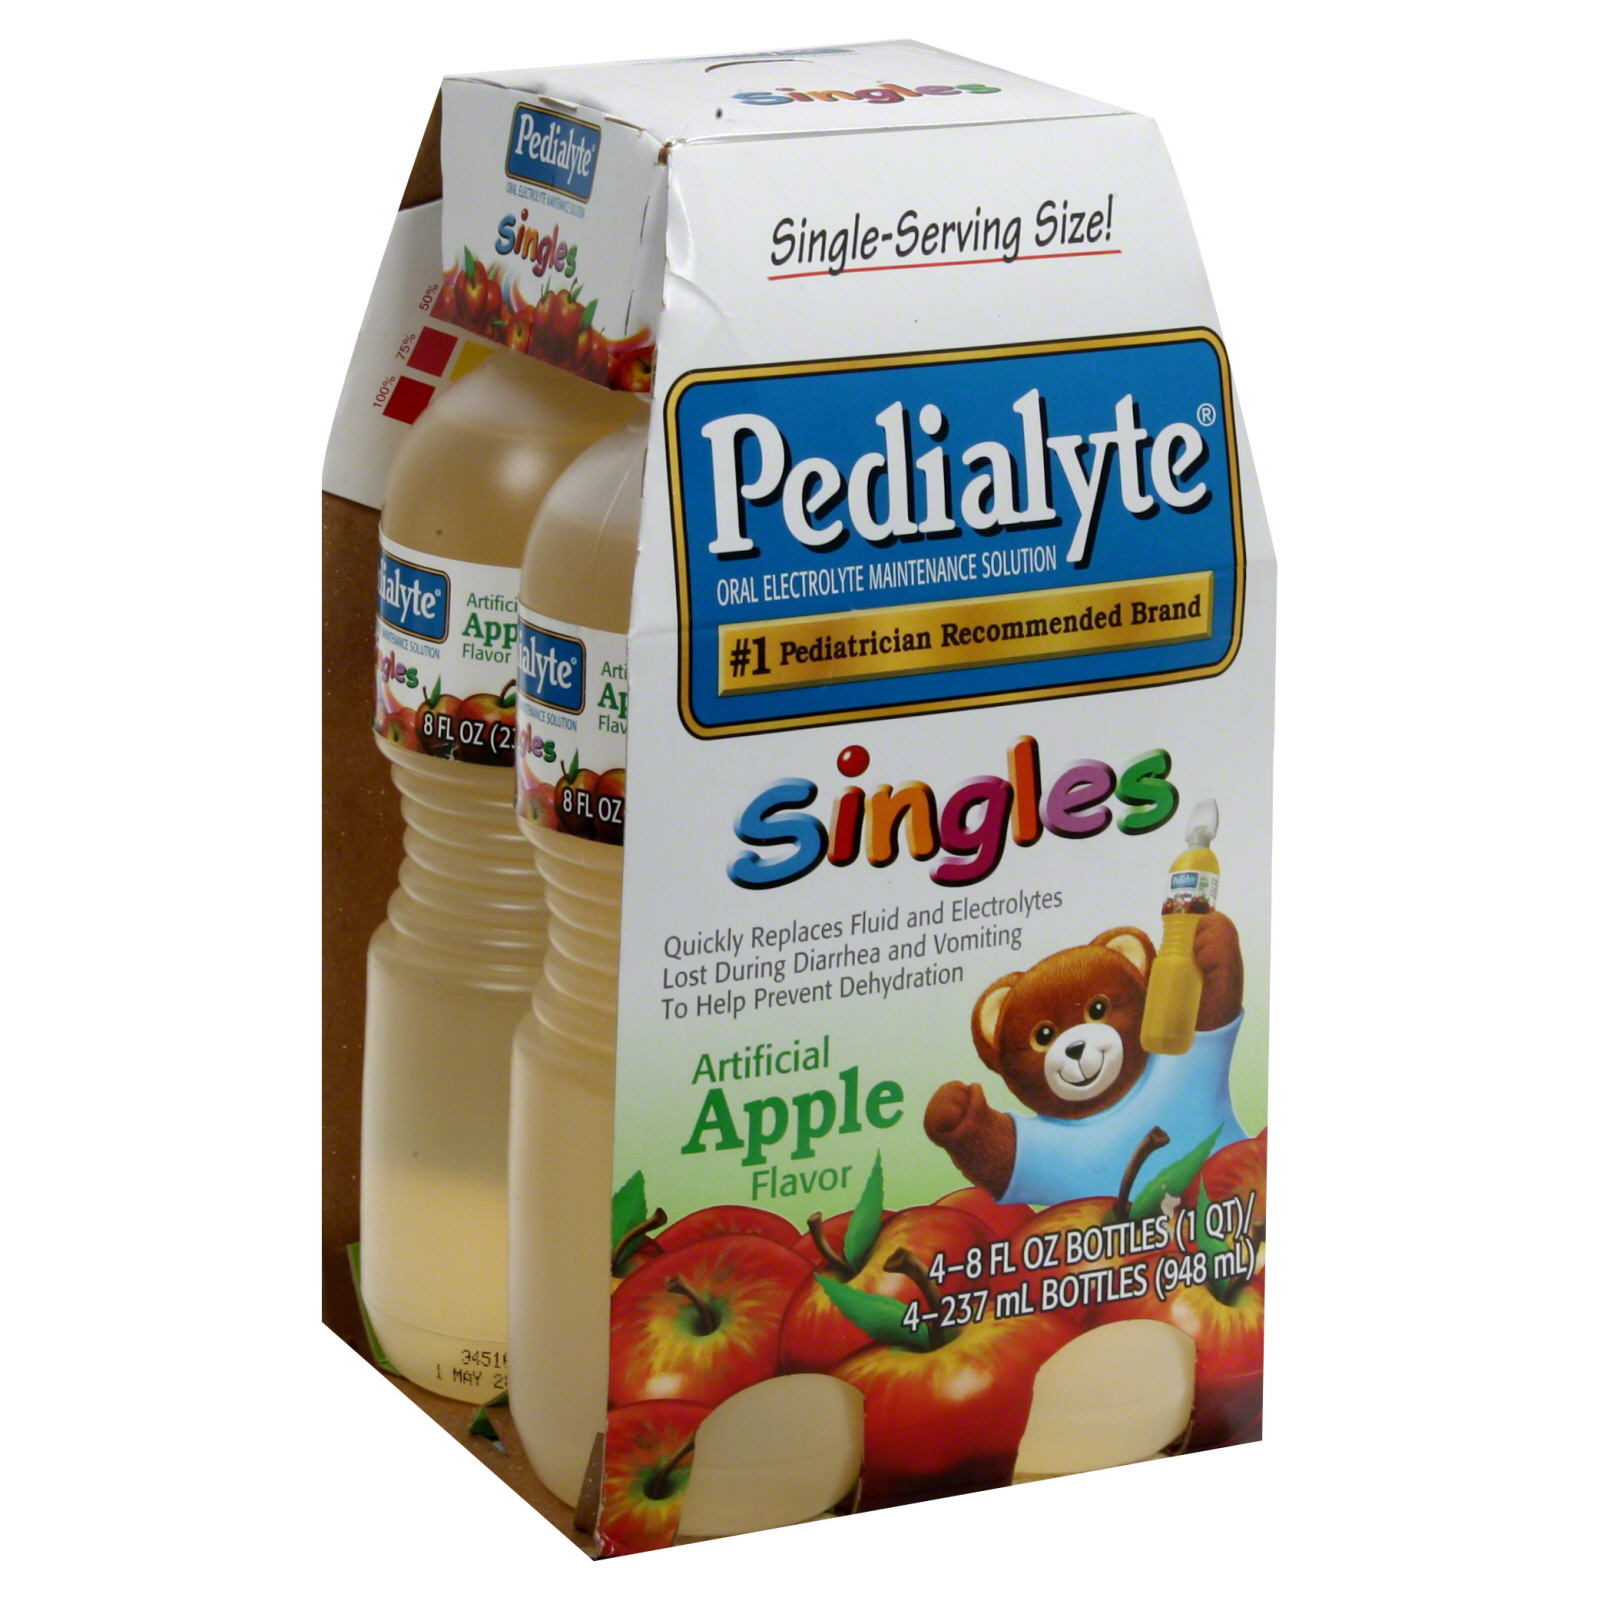 Pedialyte Singles Oral Electrolyte Maintenance Solution, Single-Serving Size, Apple, 4 - 8 fl oz (237 ml) bottles [1 qt (948 ml)]